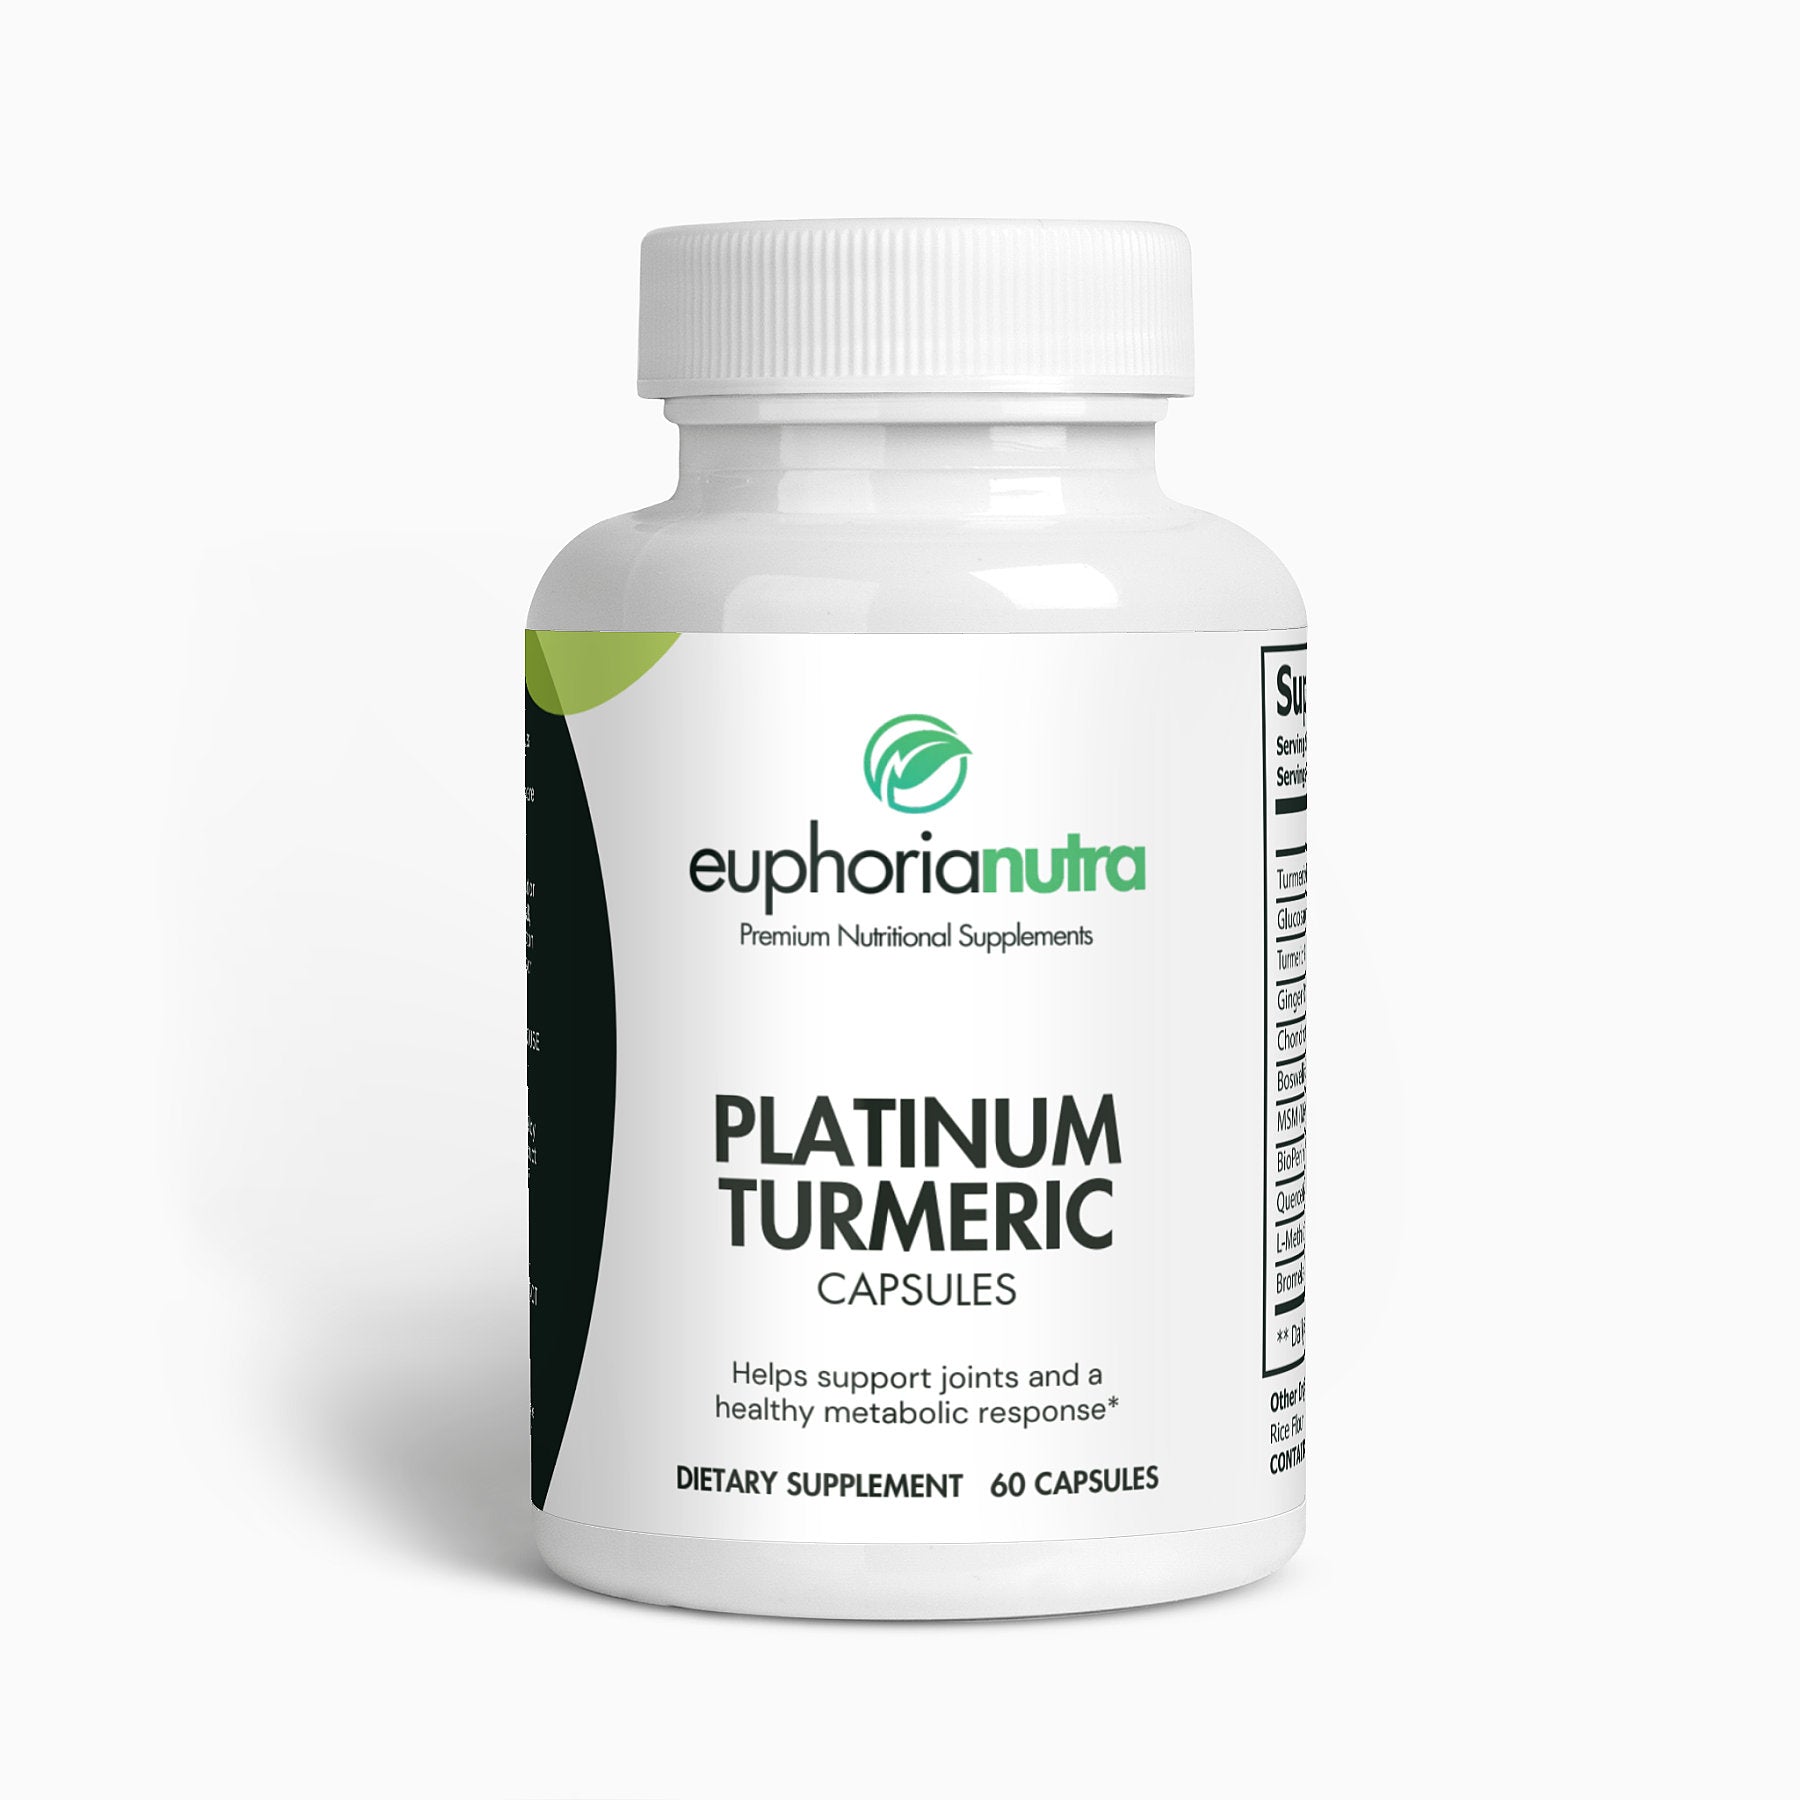 Platinum Turmeric Capsules - Advanced Blend for Optimal Wellness